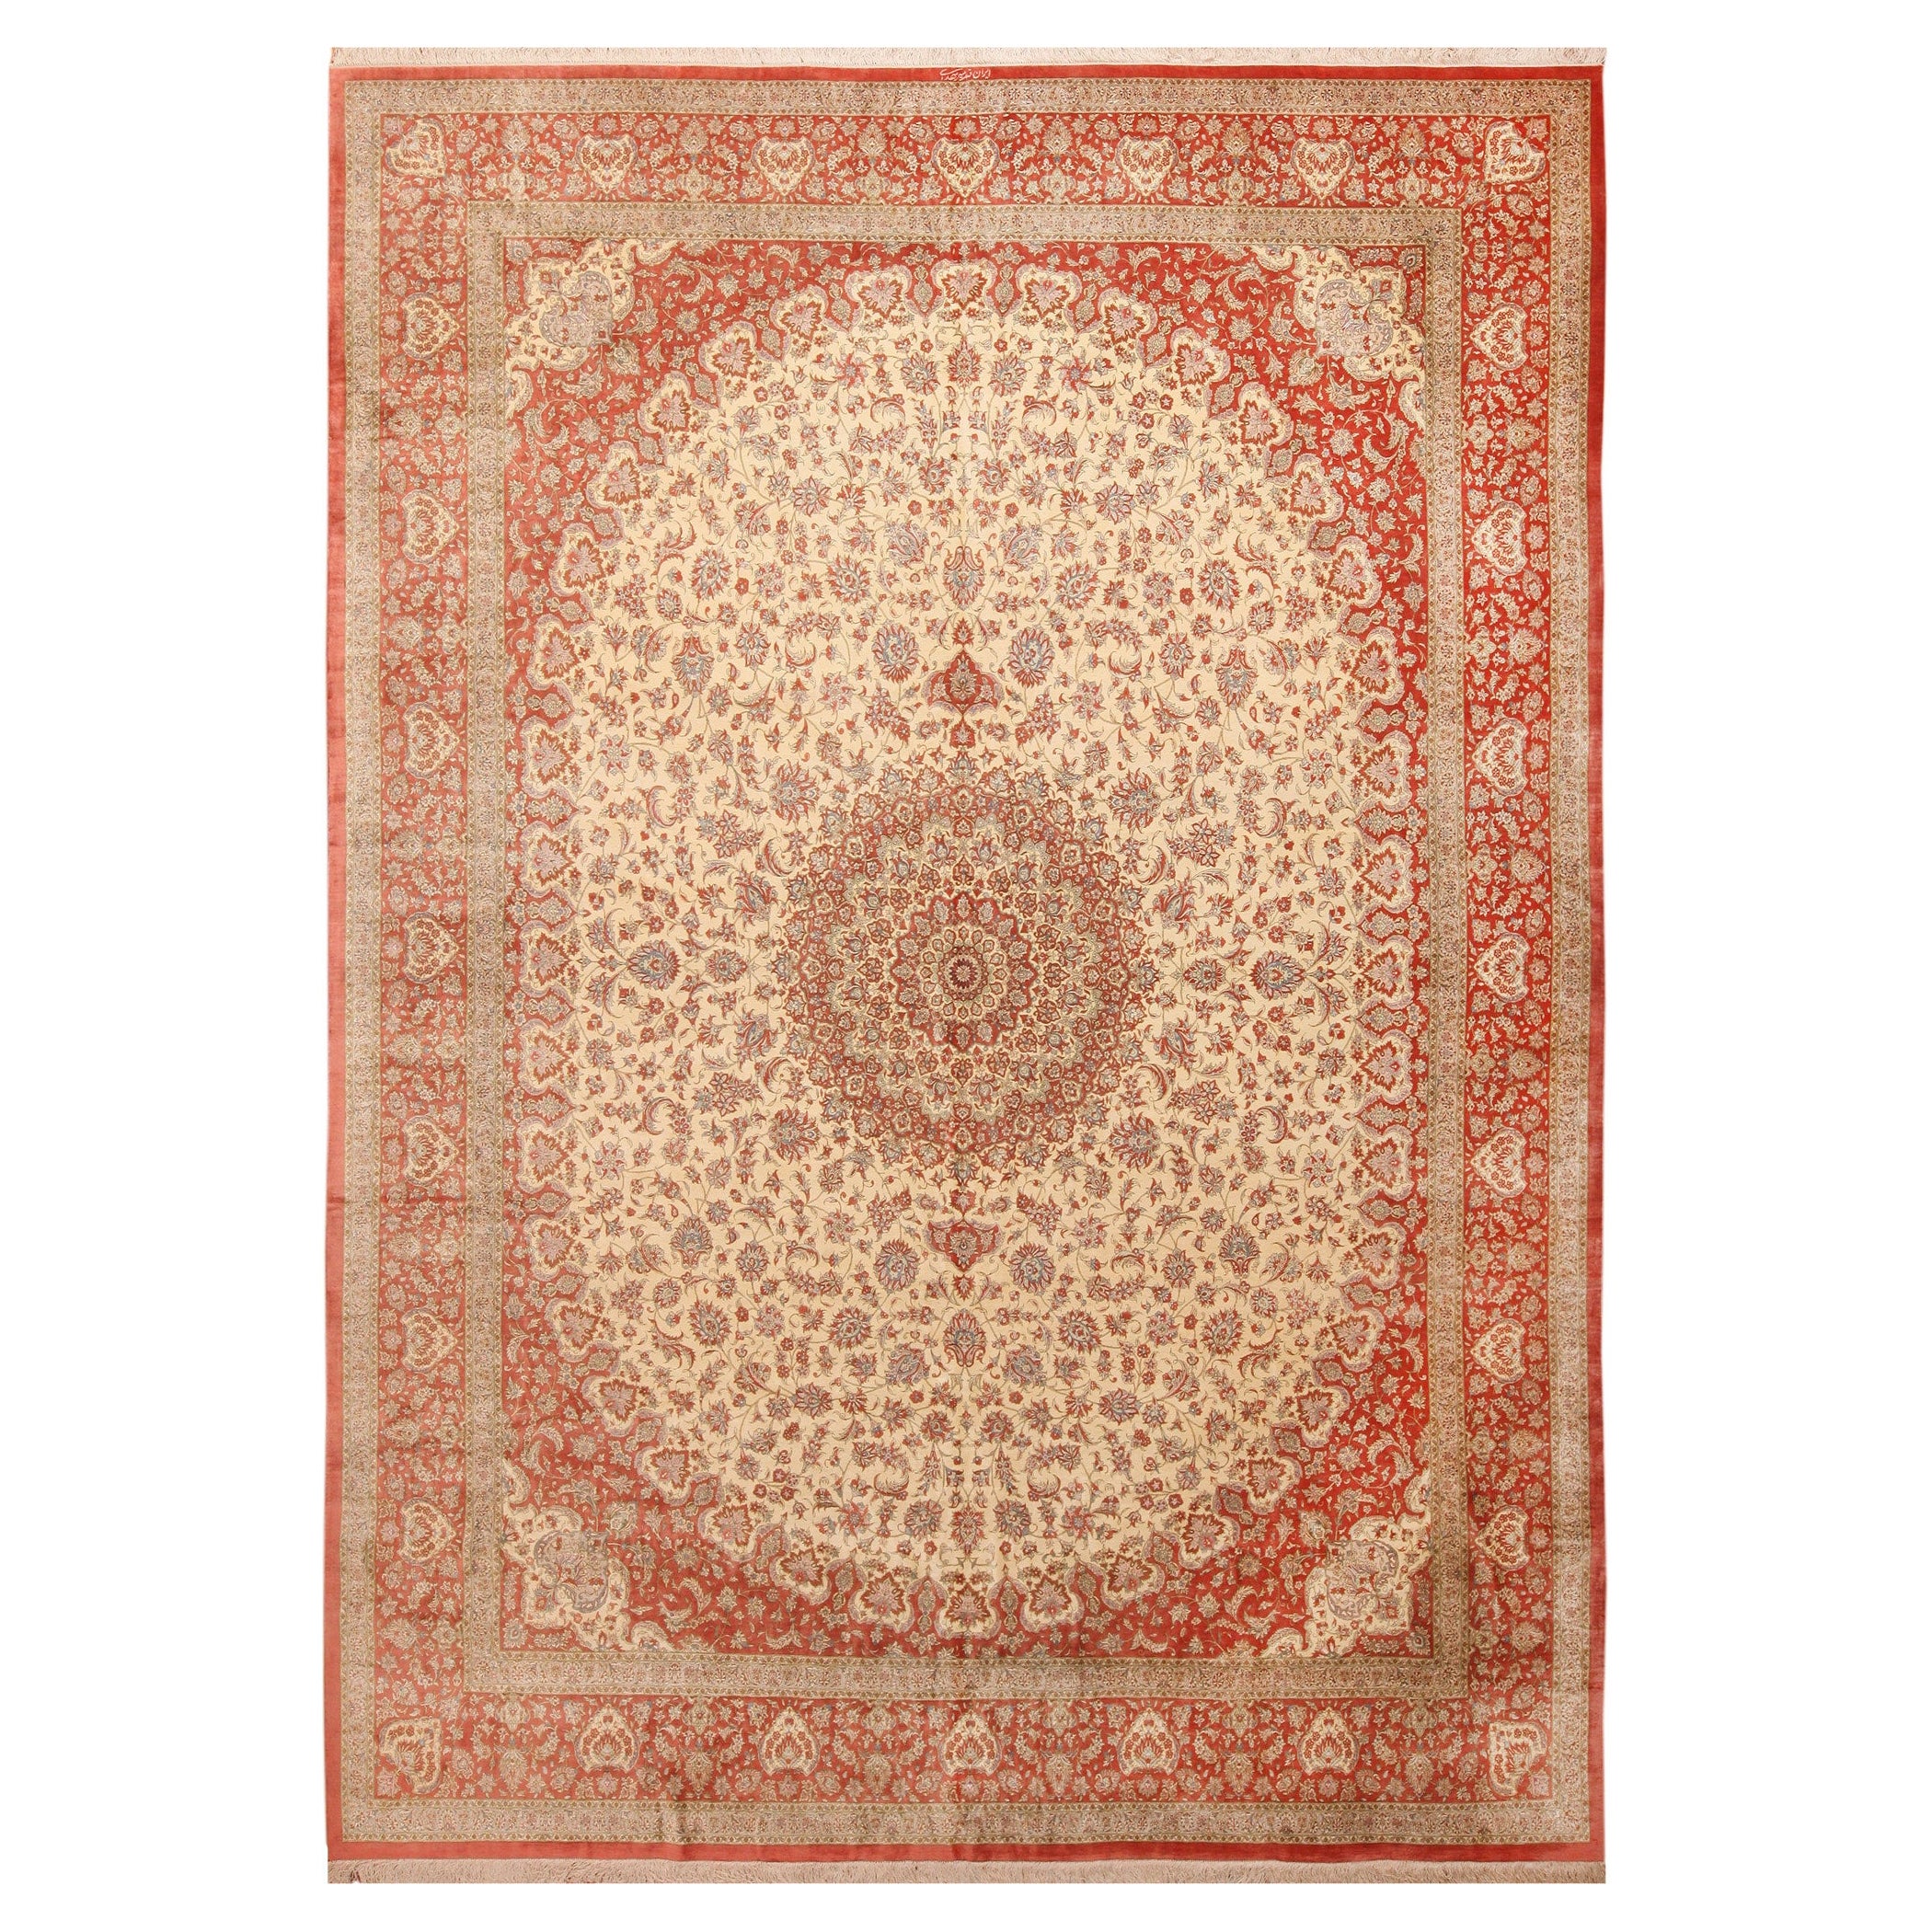 Beautiful Fine Room Size Vintage Persian Silk Qum Rug 10' x 13'4"